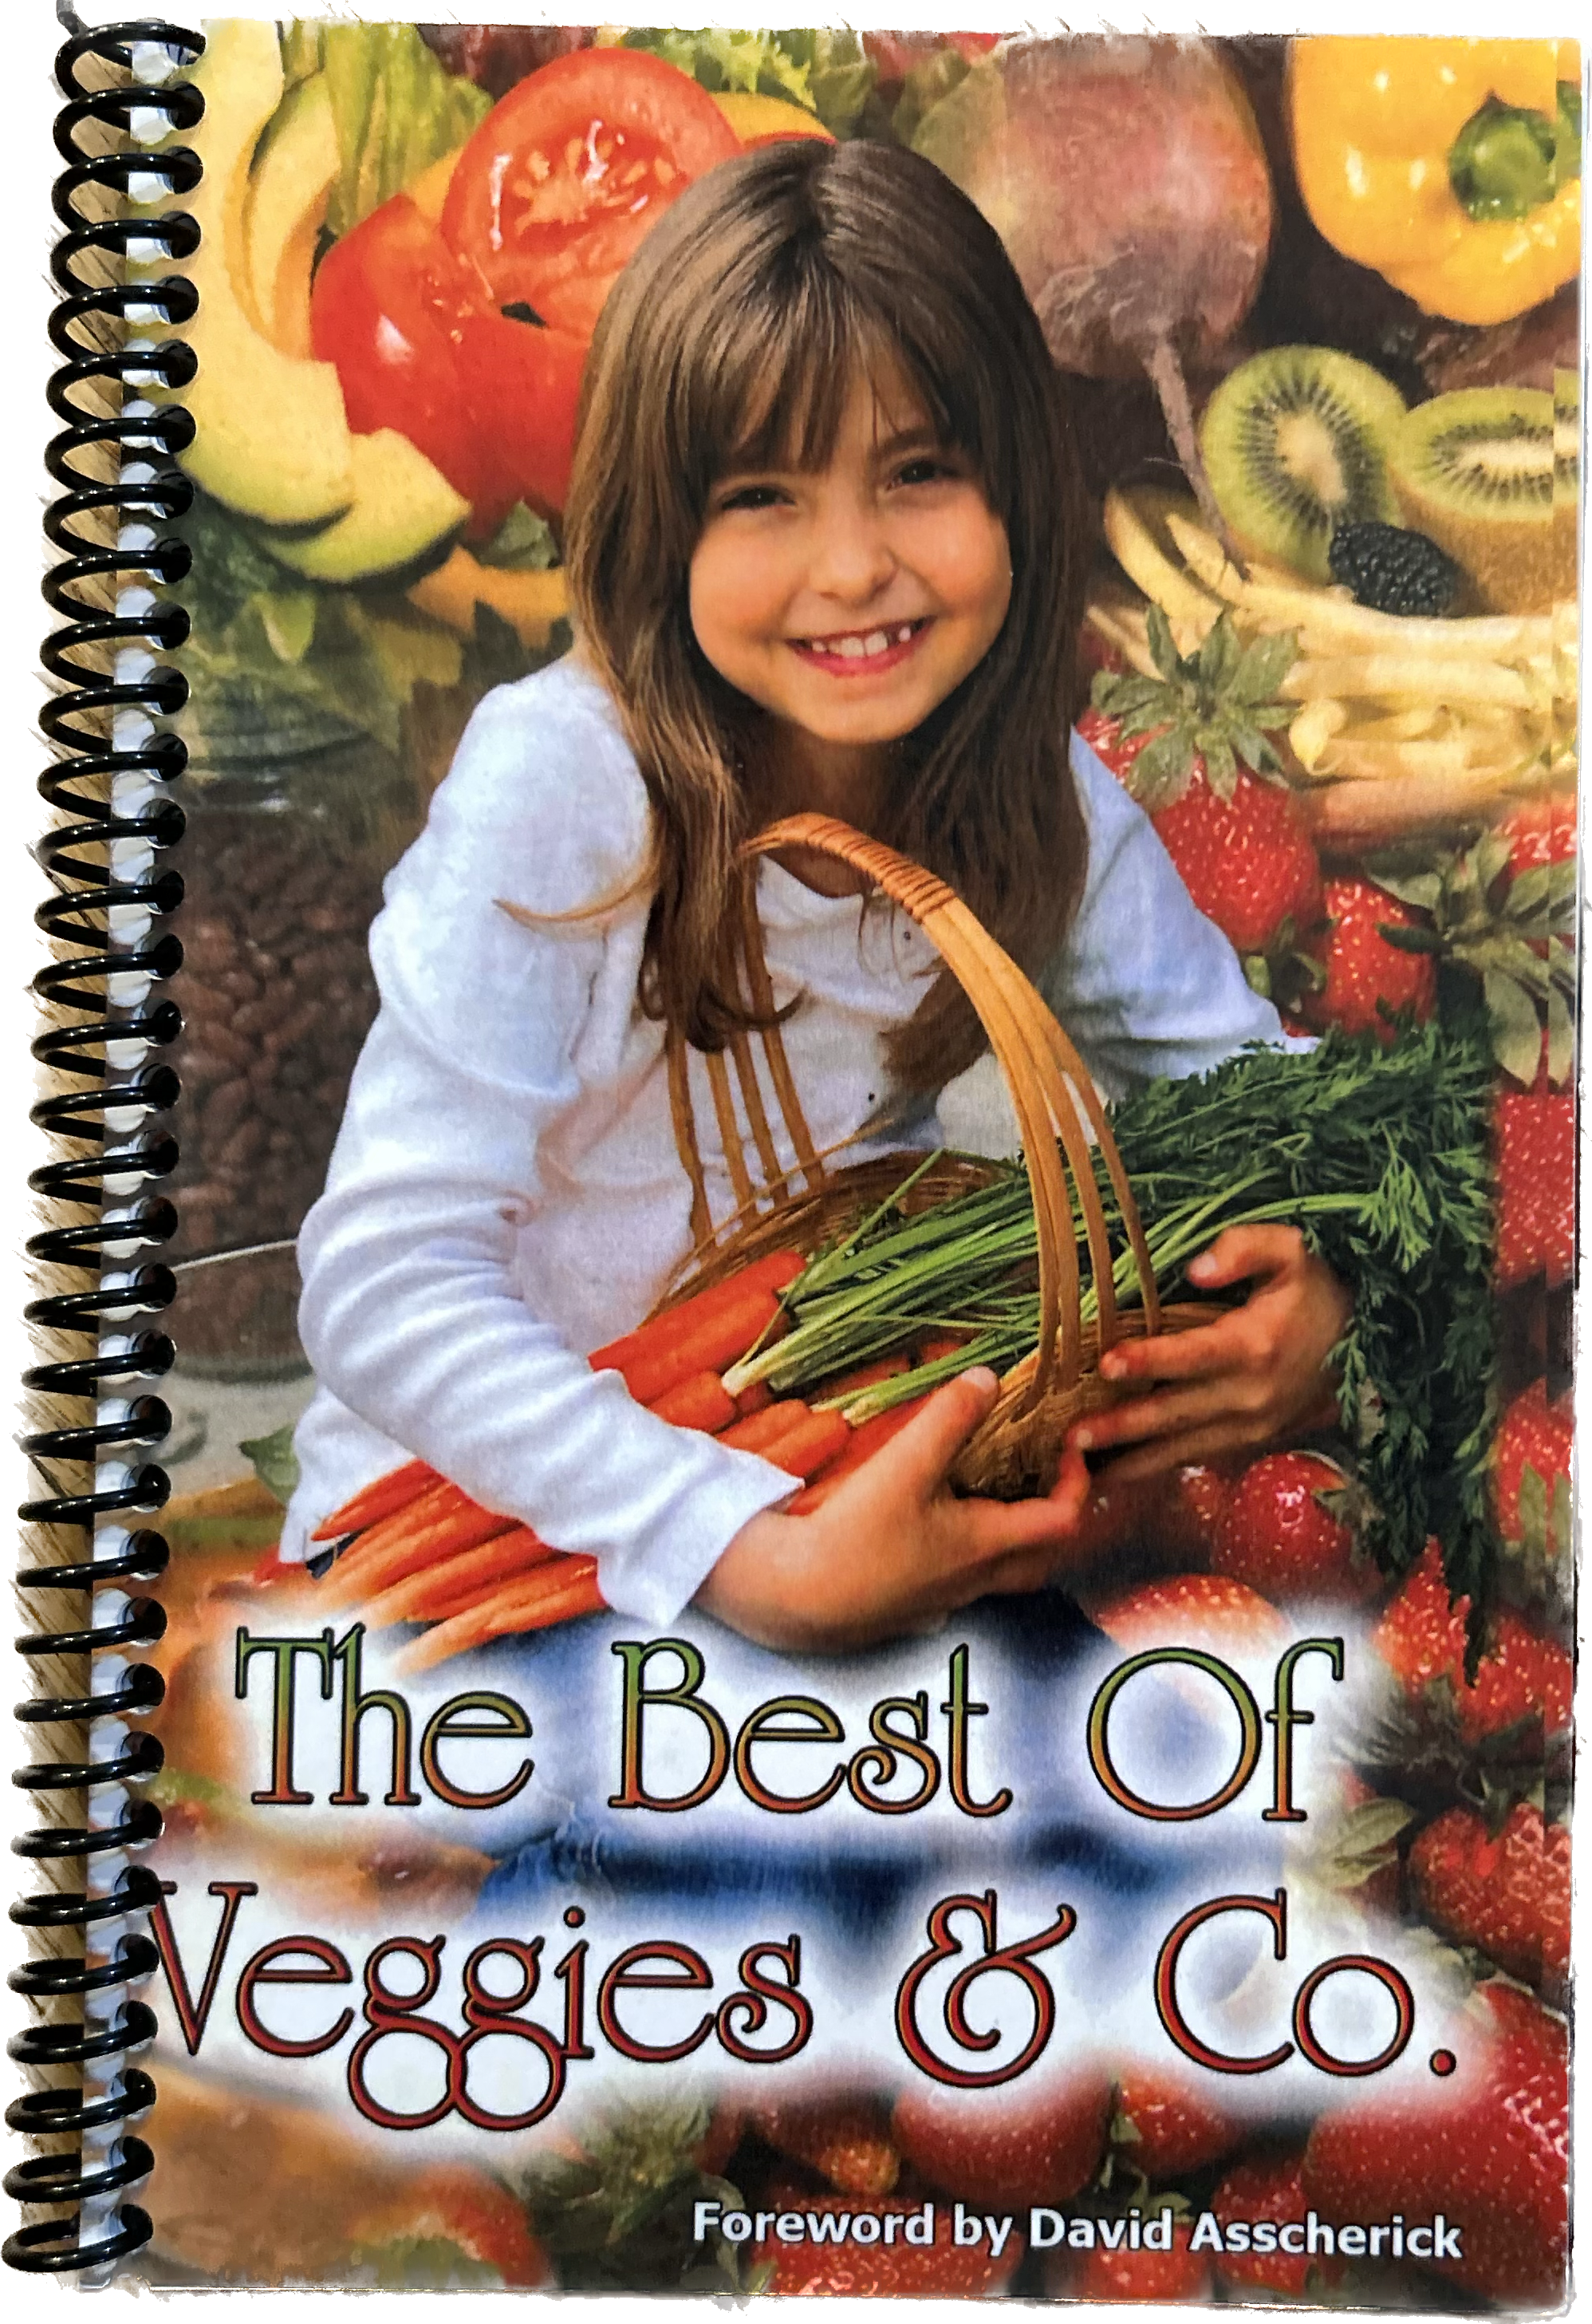 🥦 Cookbook: The Best Of Veggies & Co.